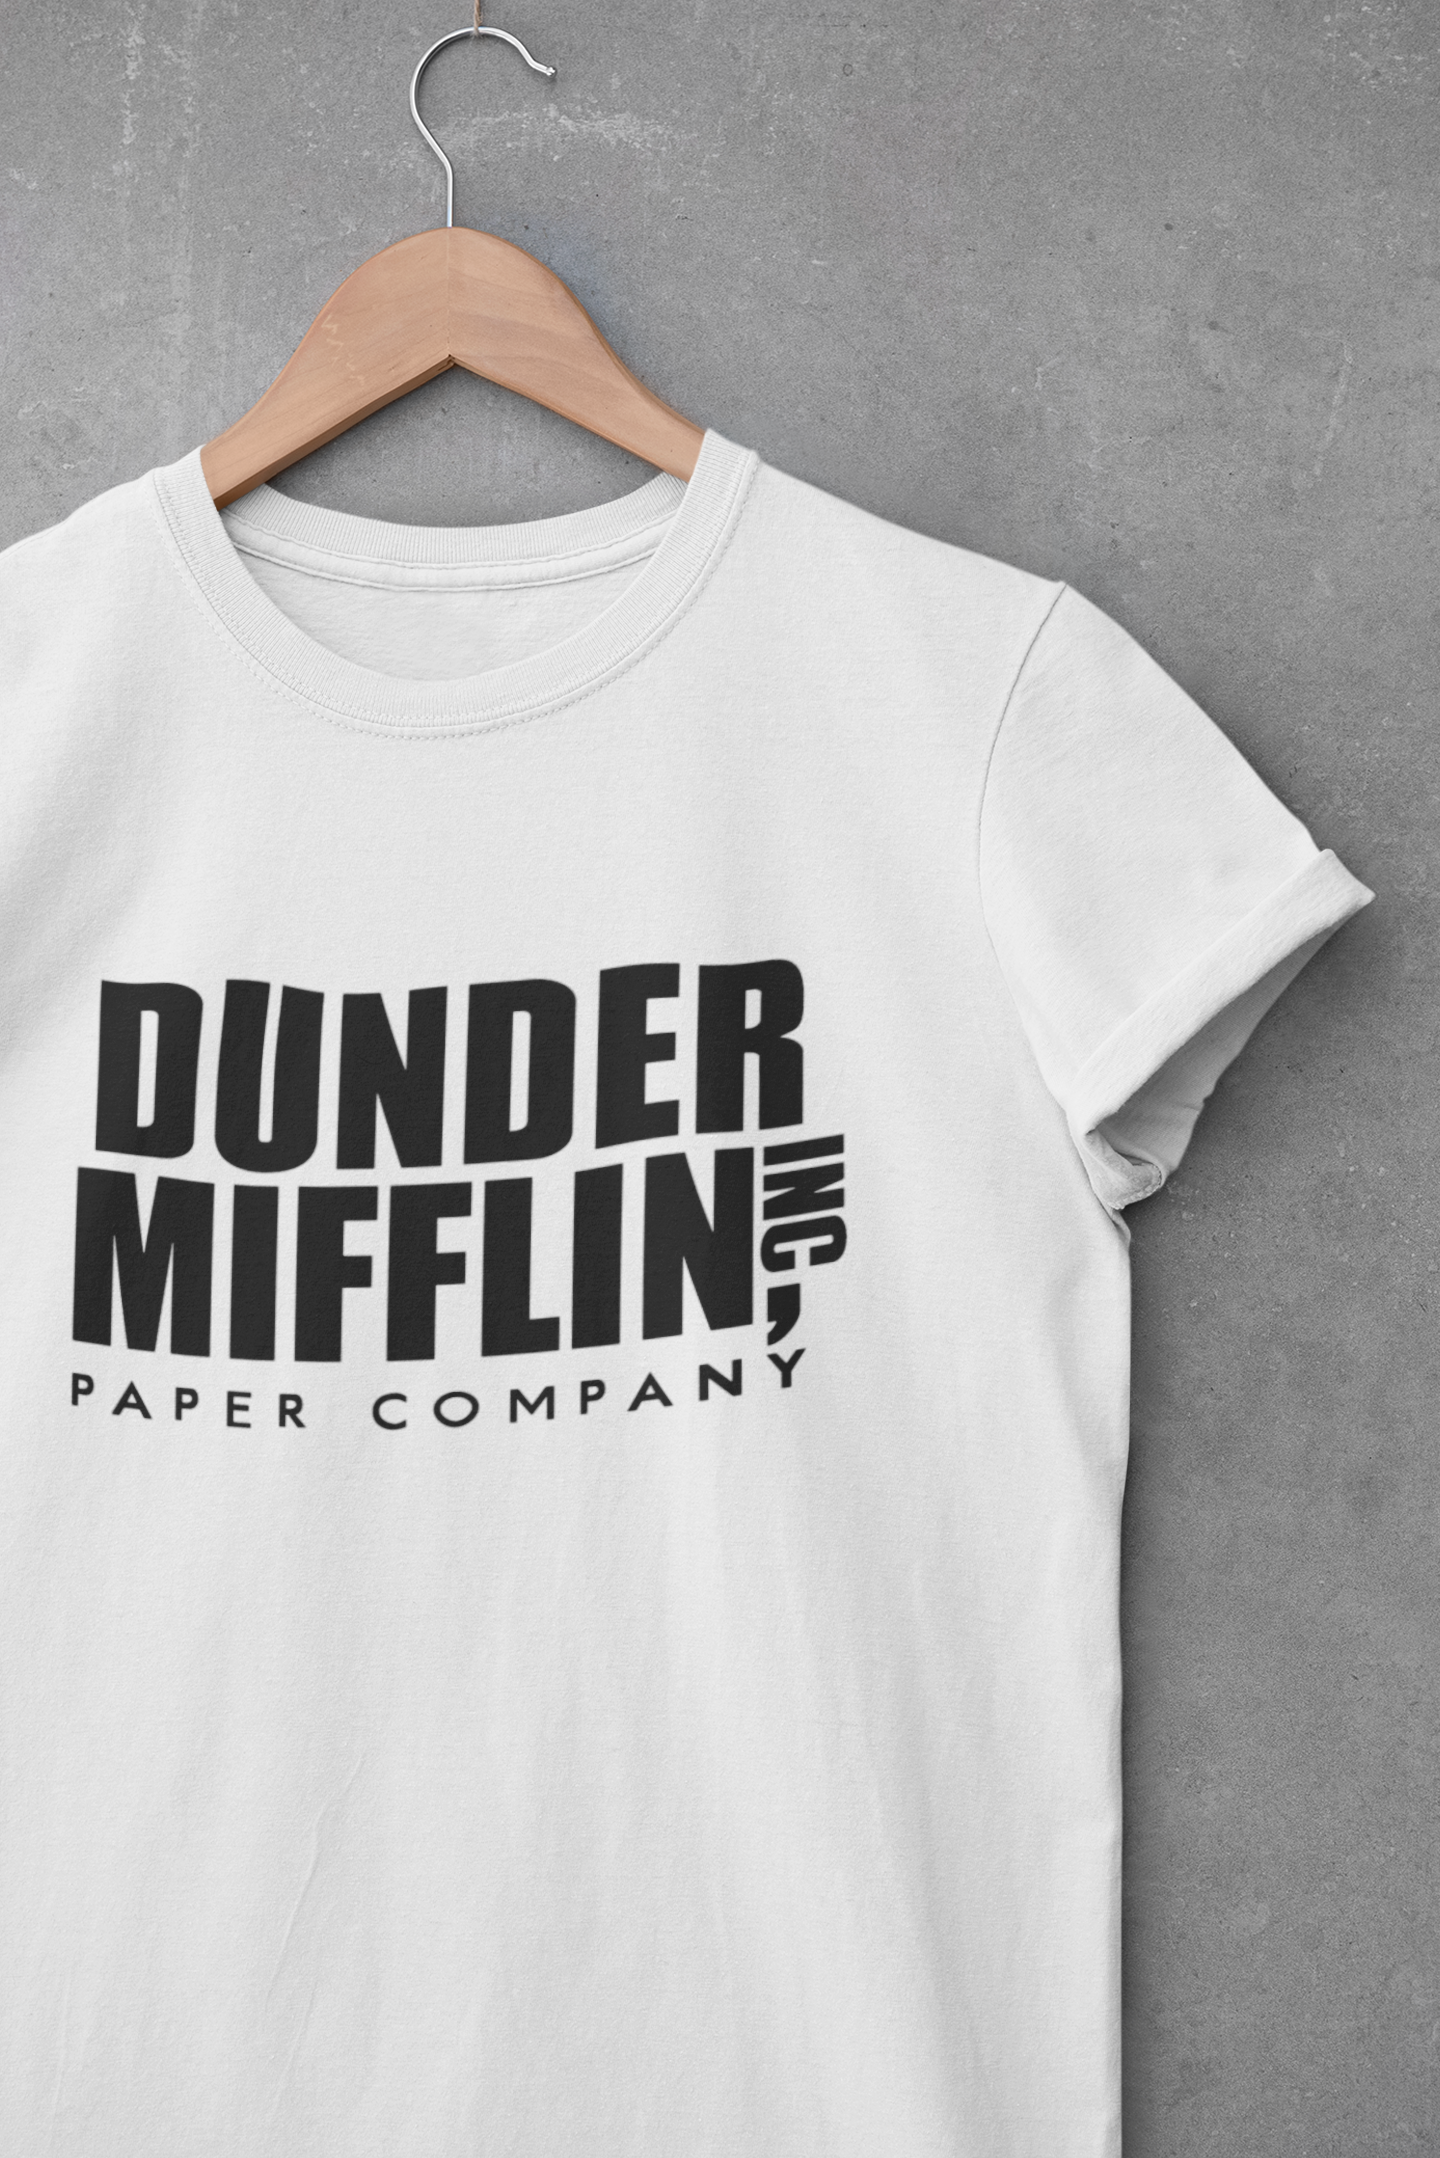 Camiseta 'Dunder Mifflin' - The Office - Séries de TV Projeto Fan Service